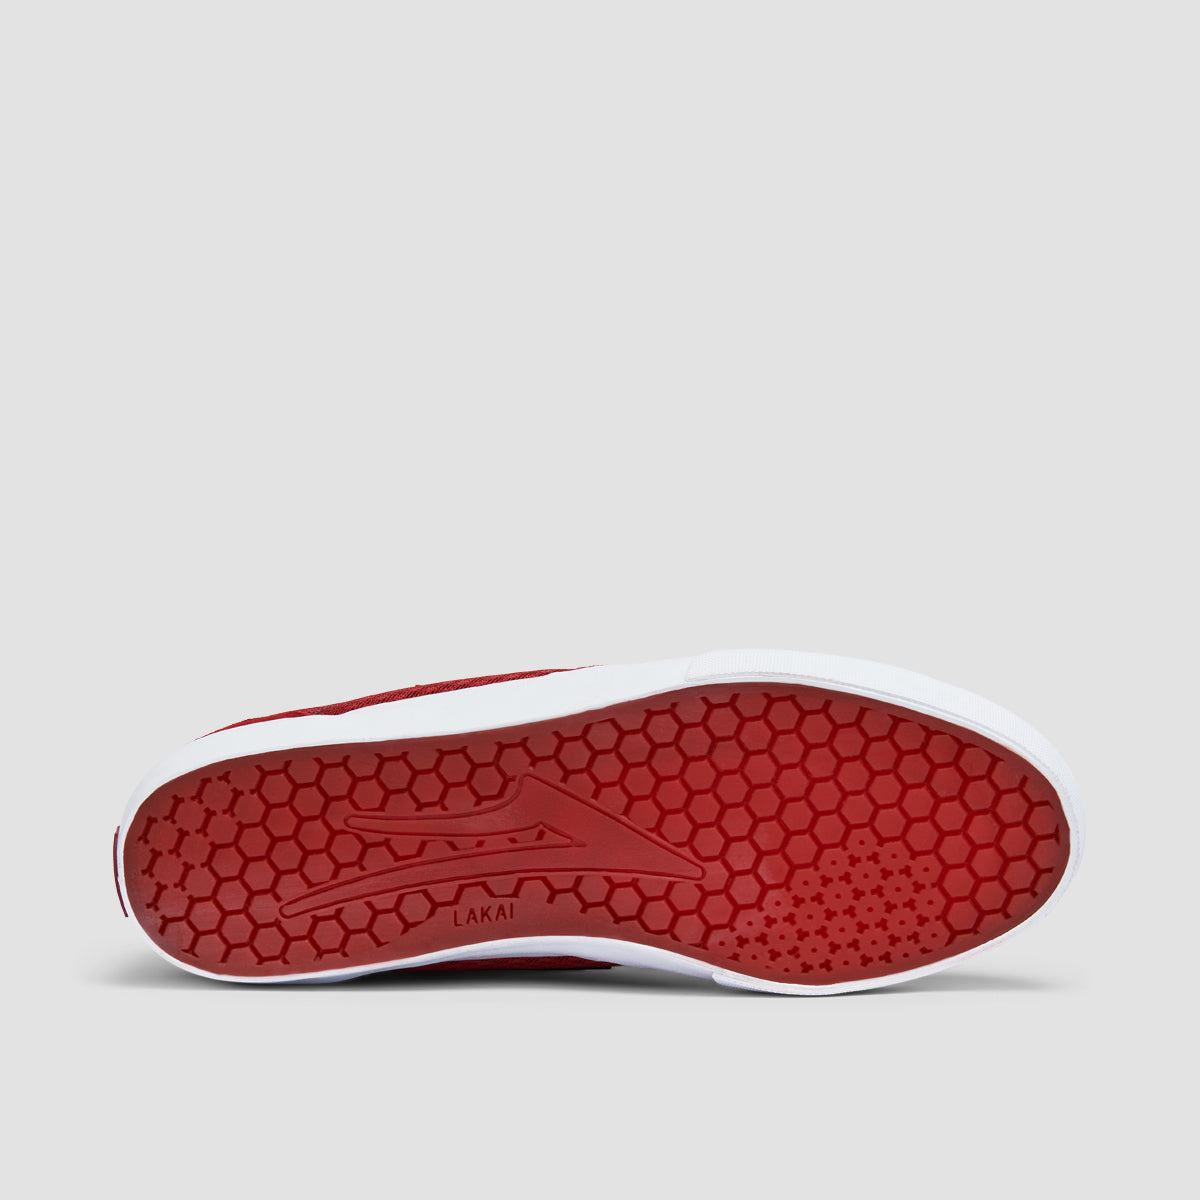 Lakai Atlantic Vulc Shoes - Red Suede